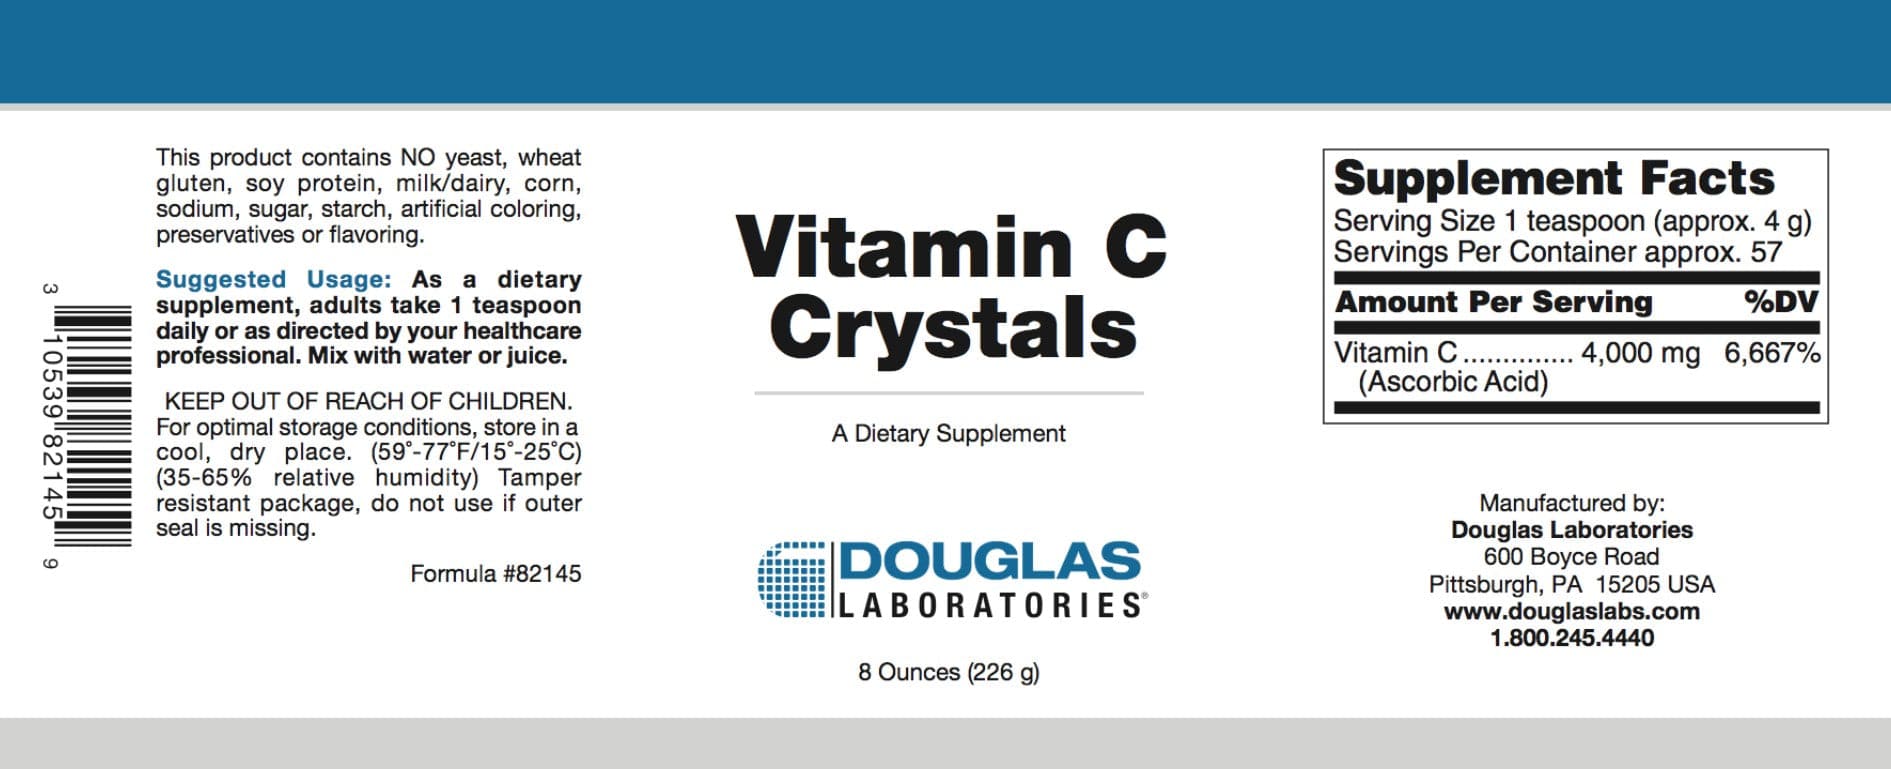 Douglas Laboratories Vitamin C Crystals